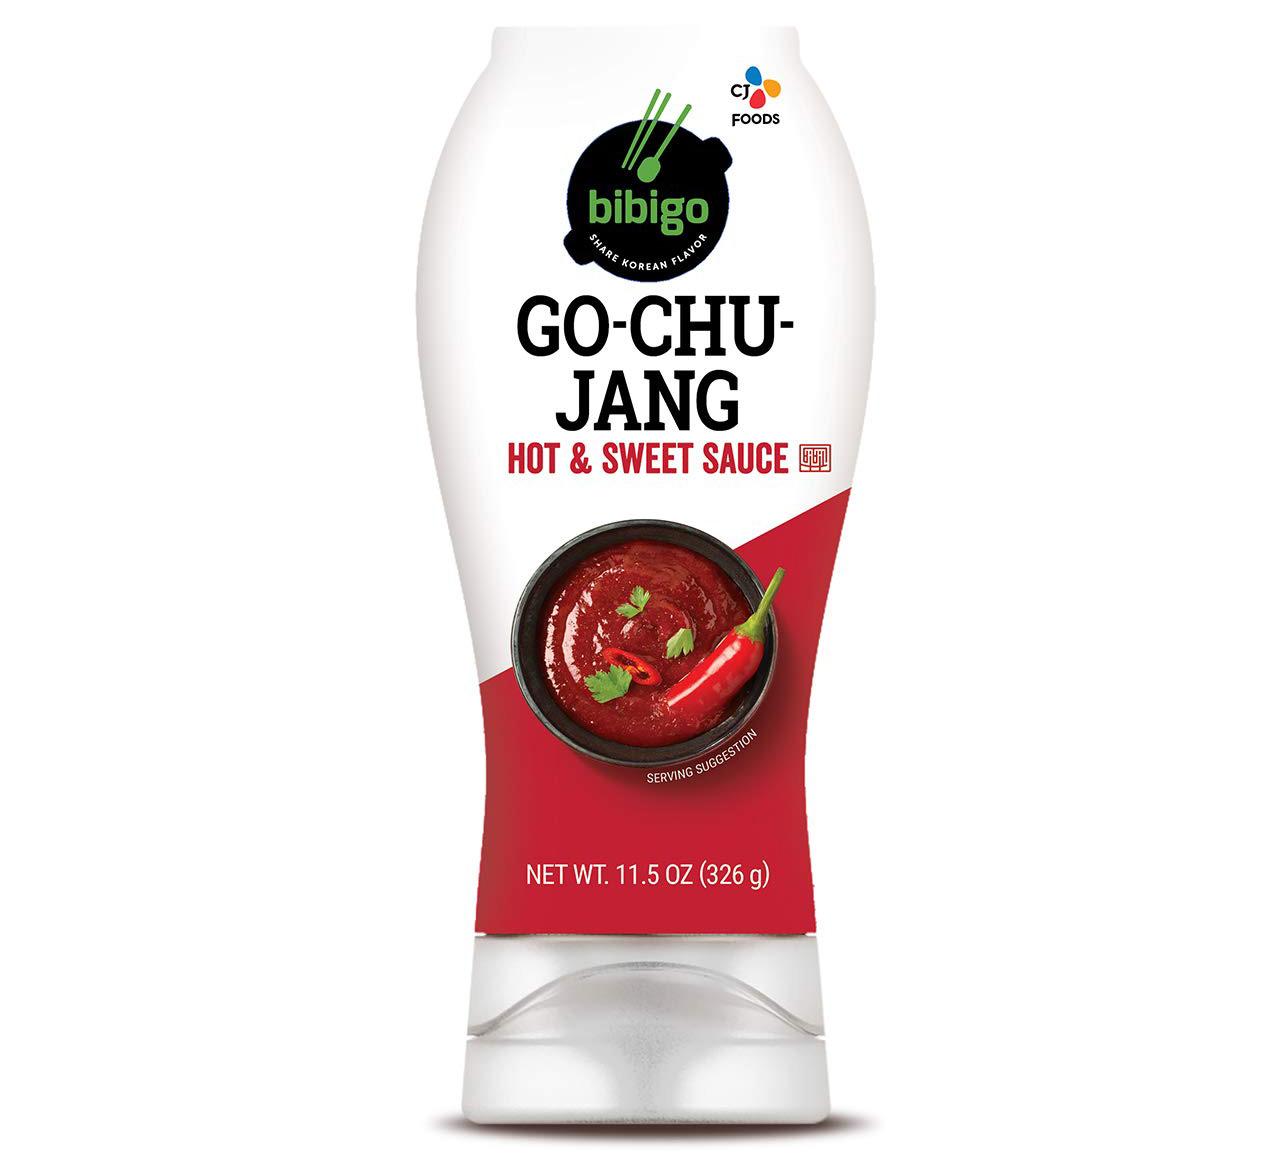 Bibigo Gochujang Hot and Sweet Sauce for $2.99